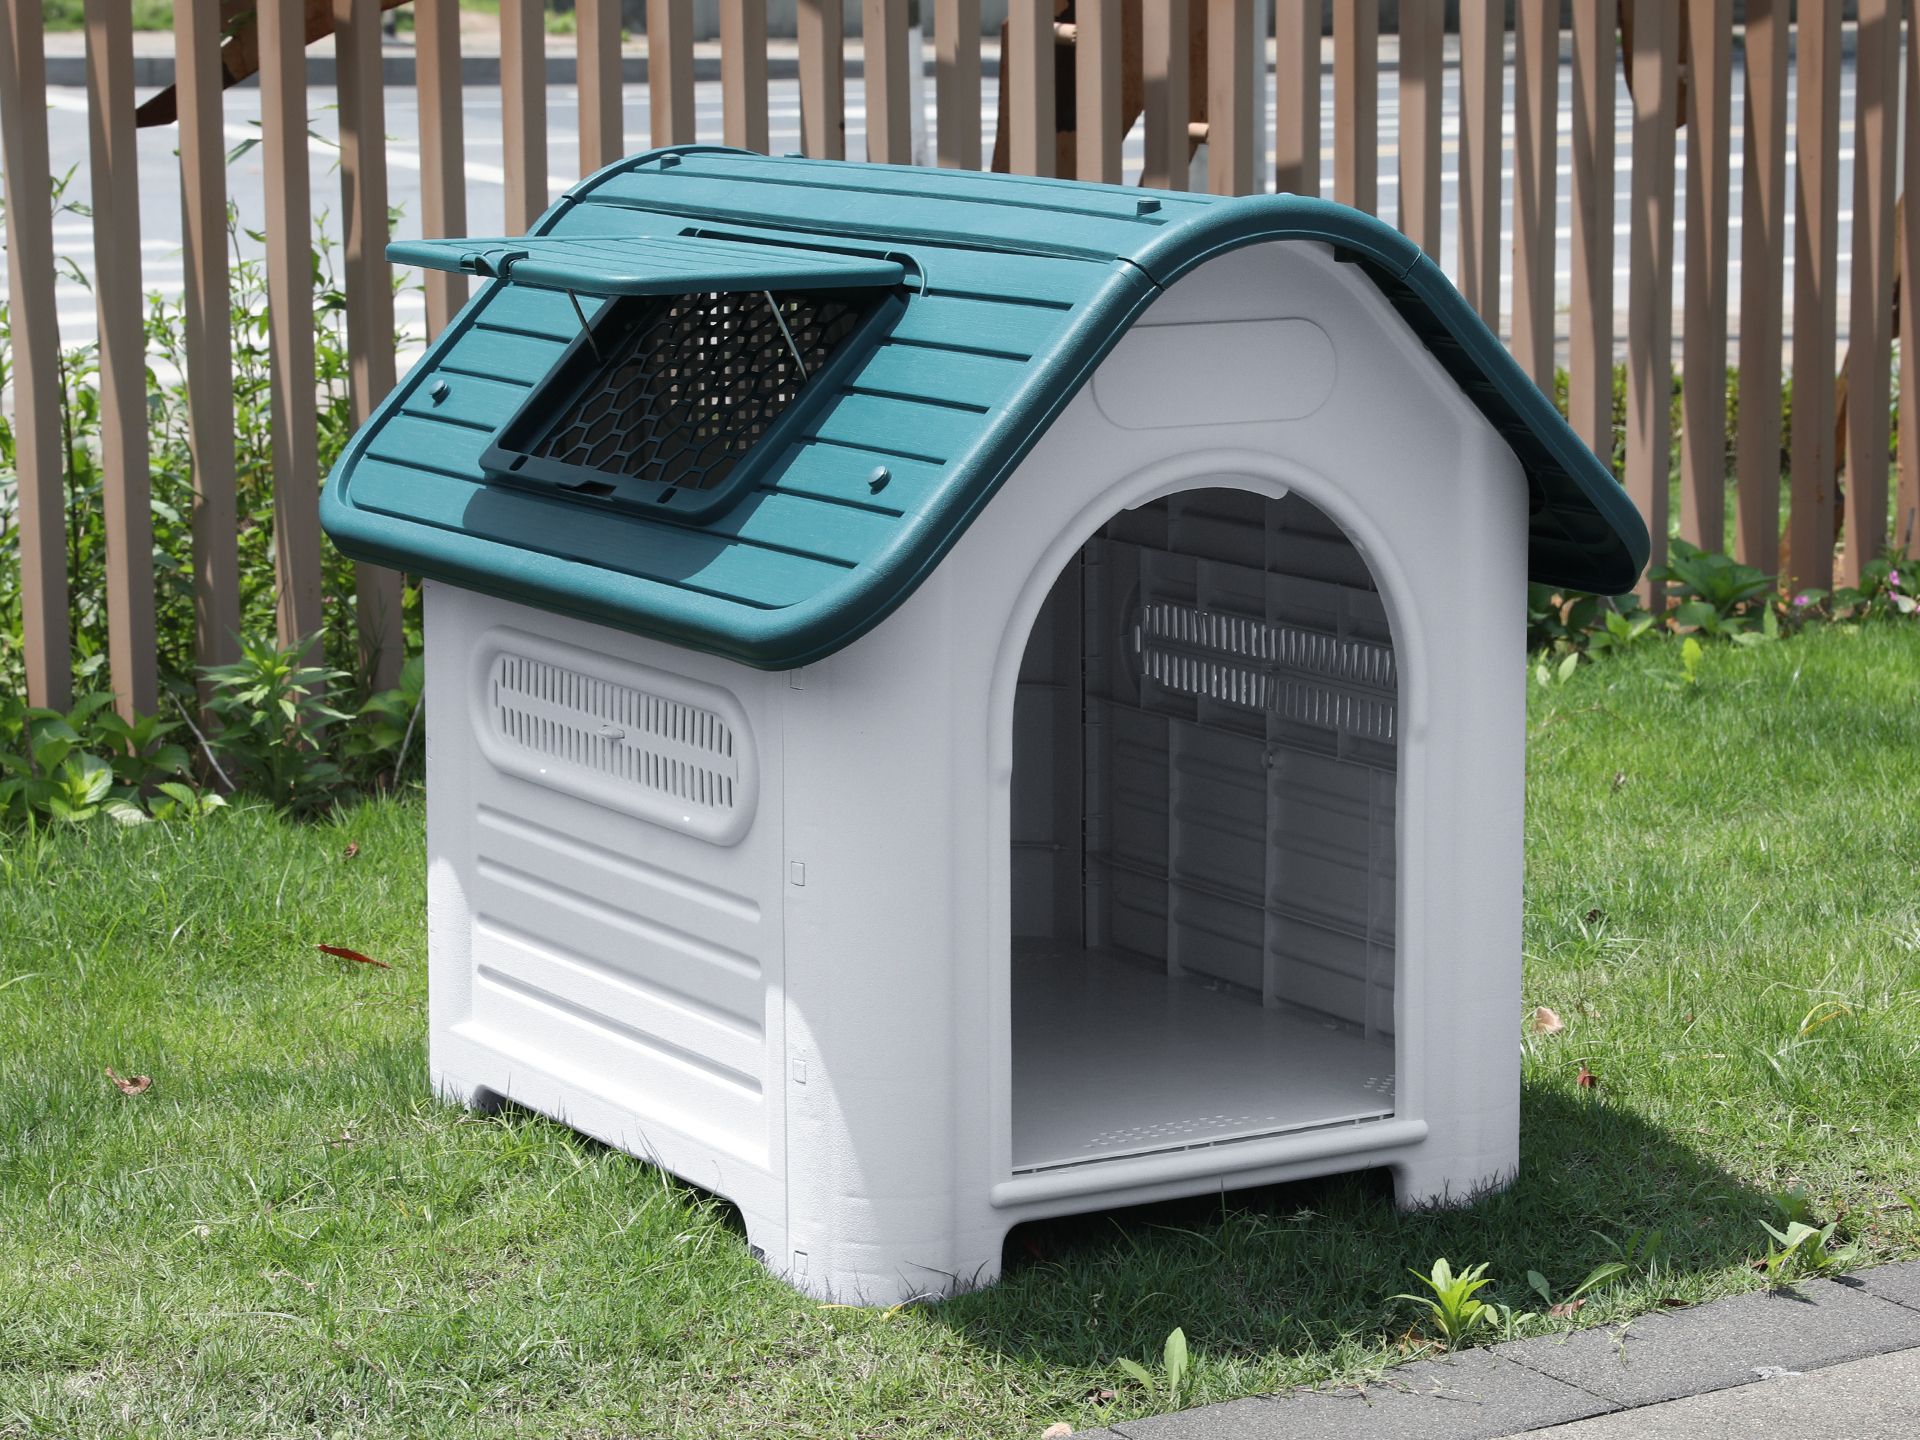 Medium Plastic Dog House with Window - Blue